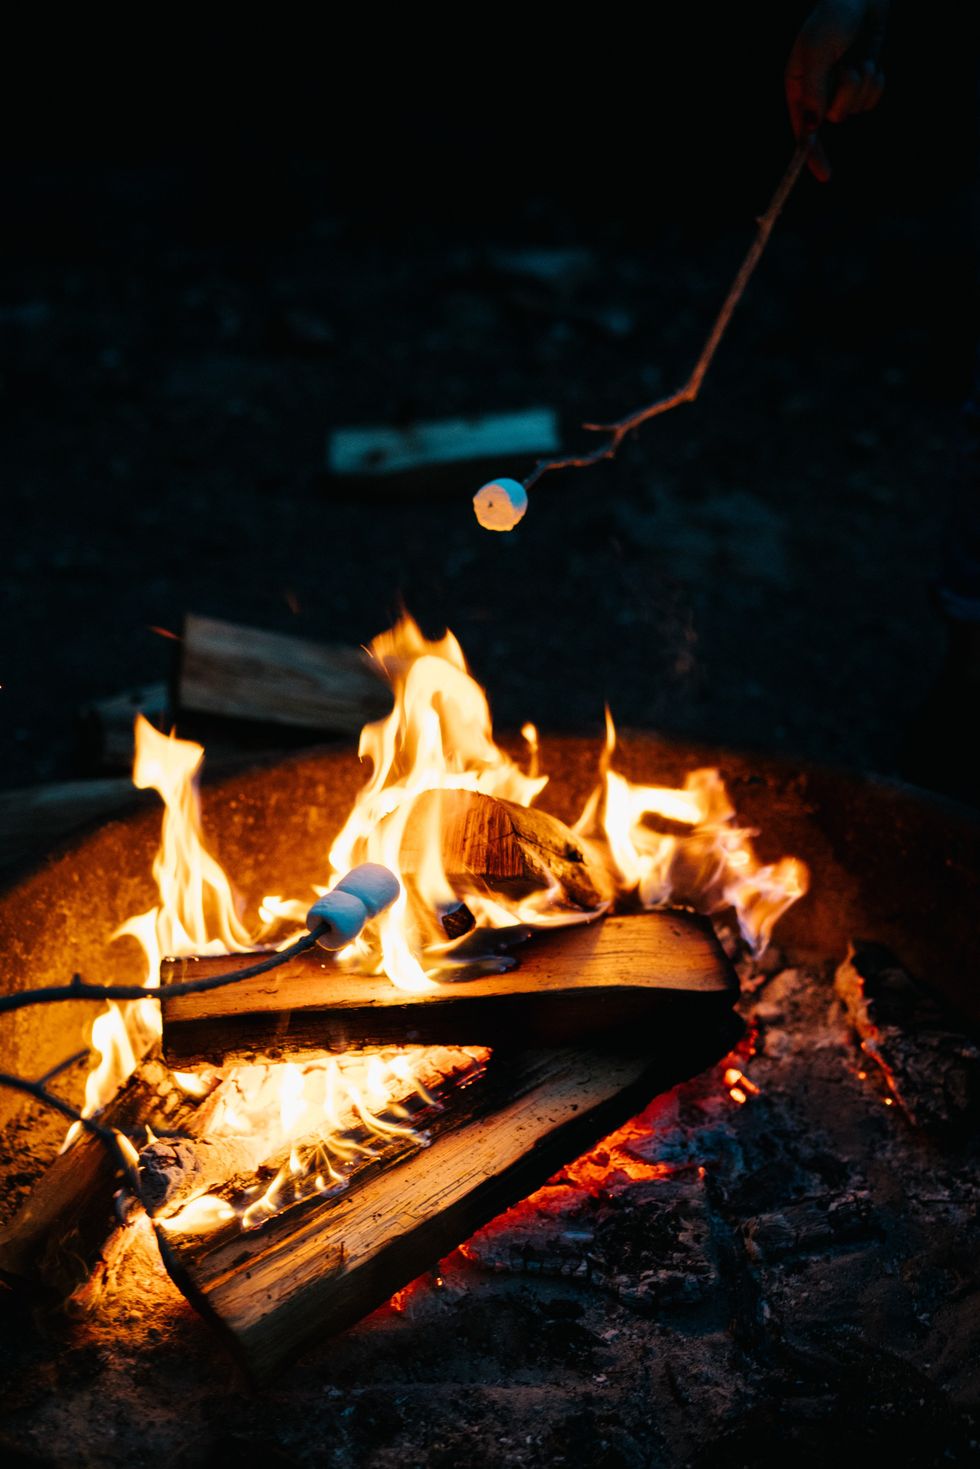 Burning marshmallow in a bonfire